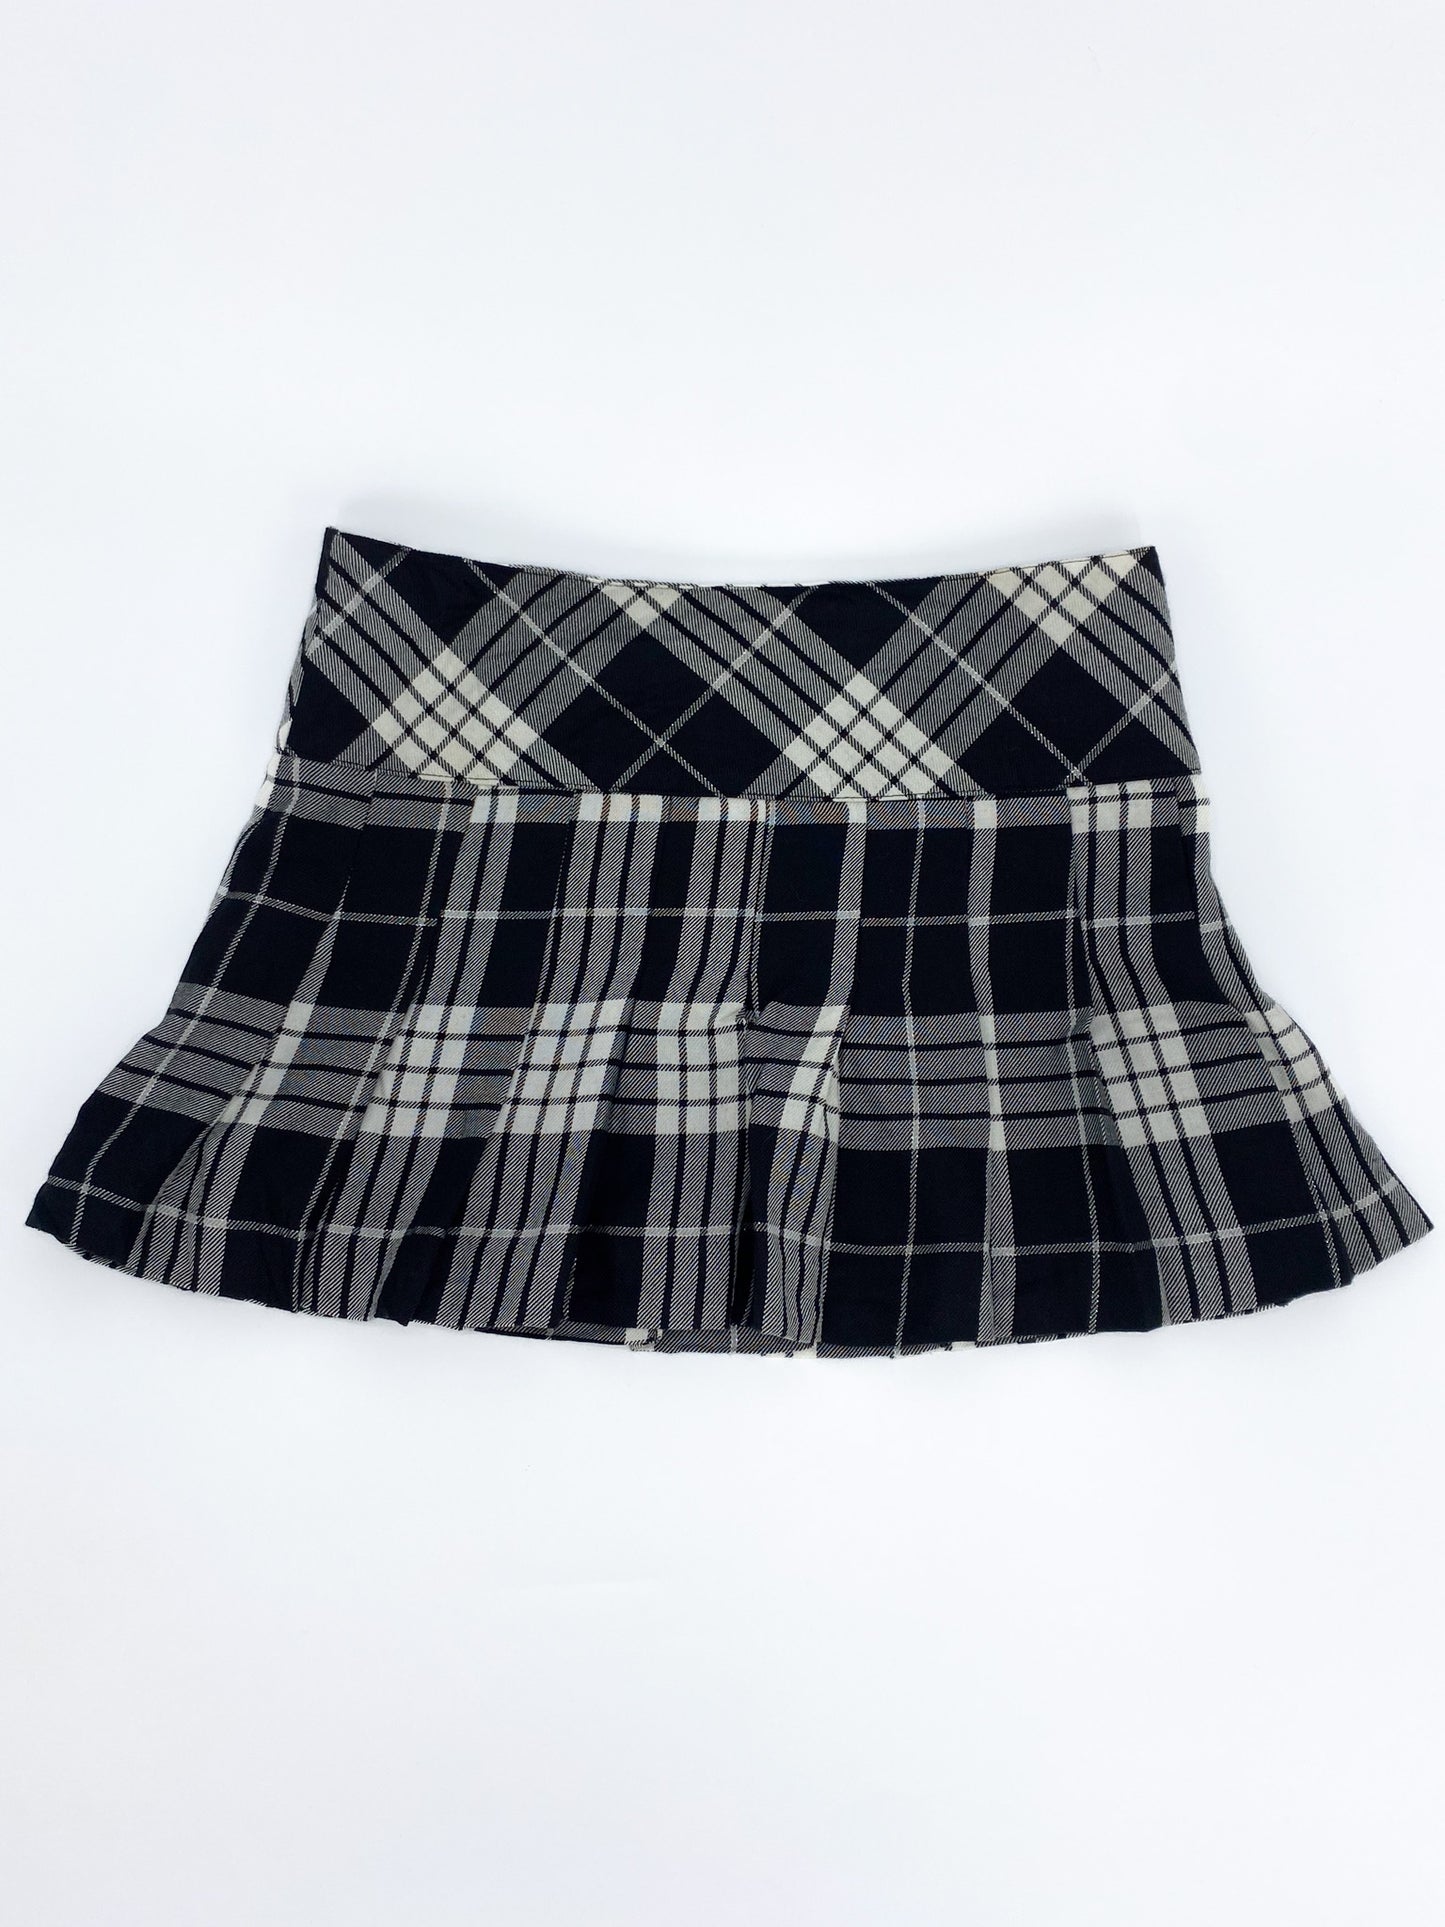 Vintage 00's Black/White Tartan Mini Skirt  - XS